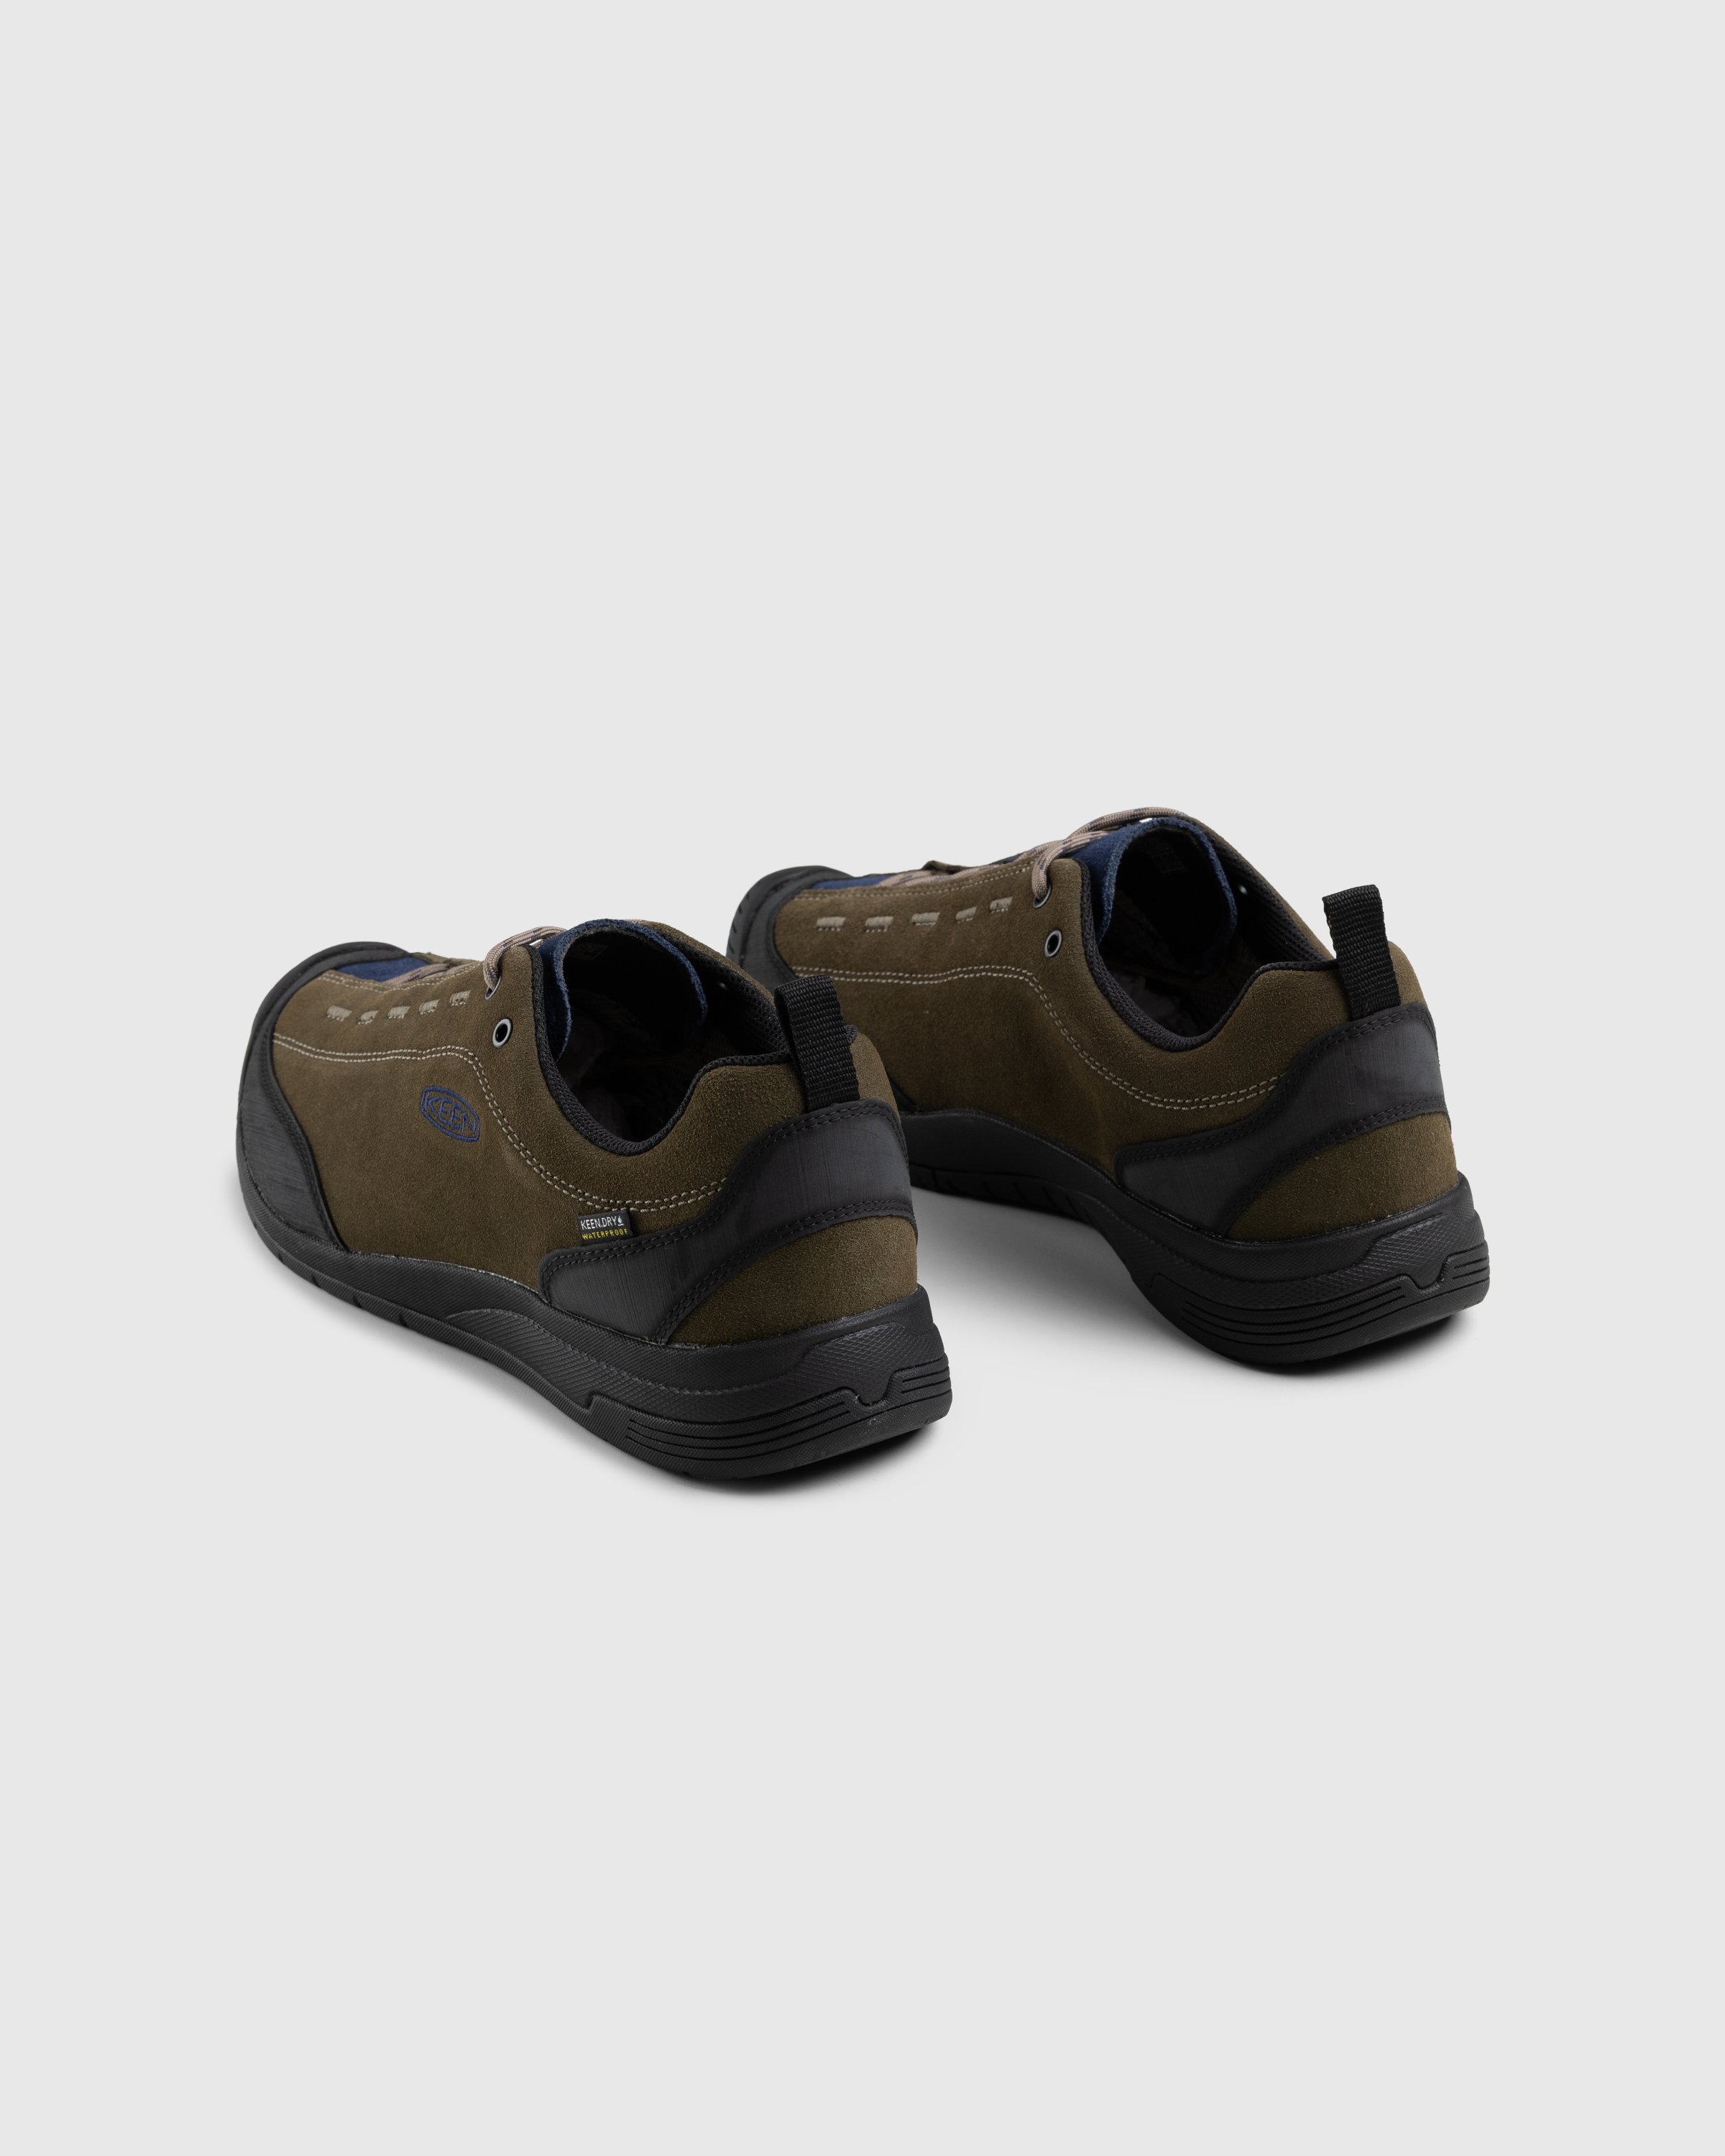 Keen - JASPER II WP CANTEEN/NAVAL ACADEMY - Footwear - Multi - Image 4